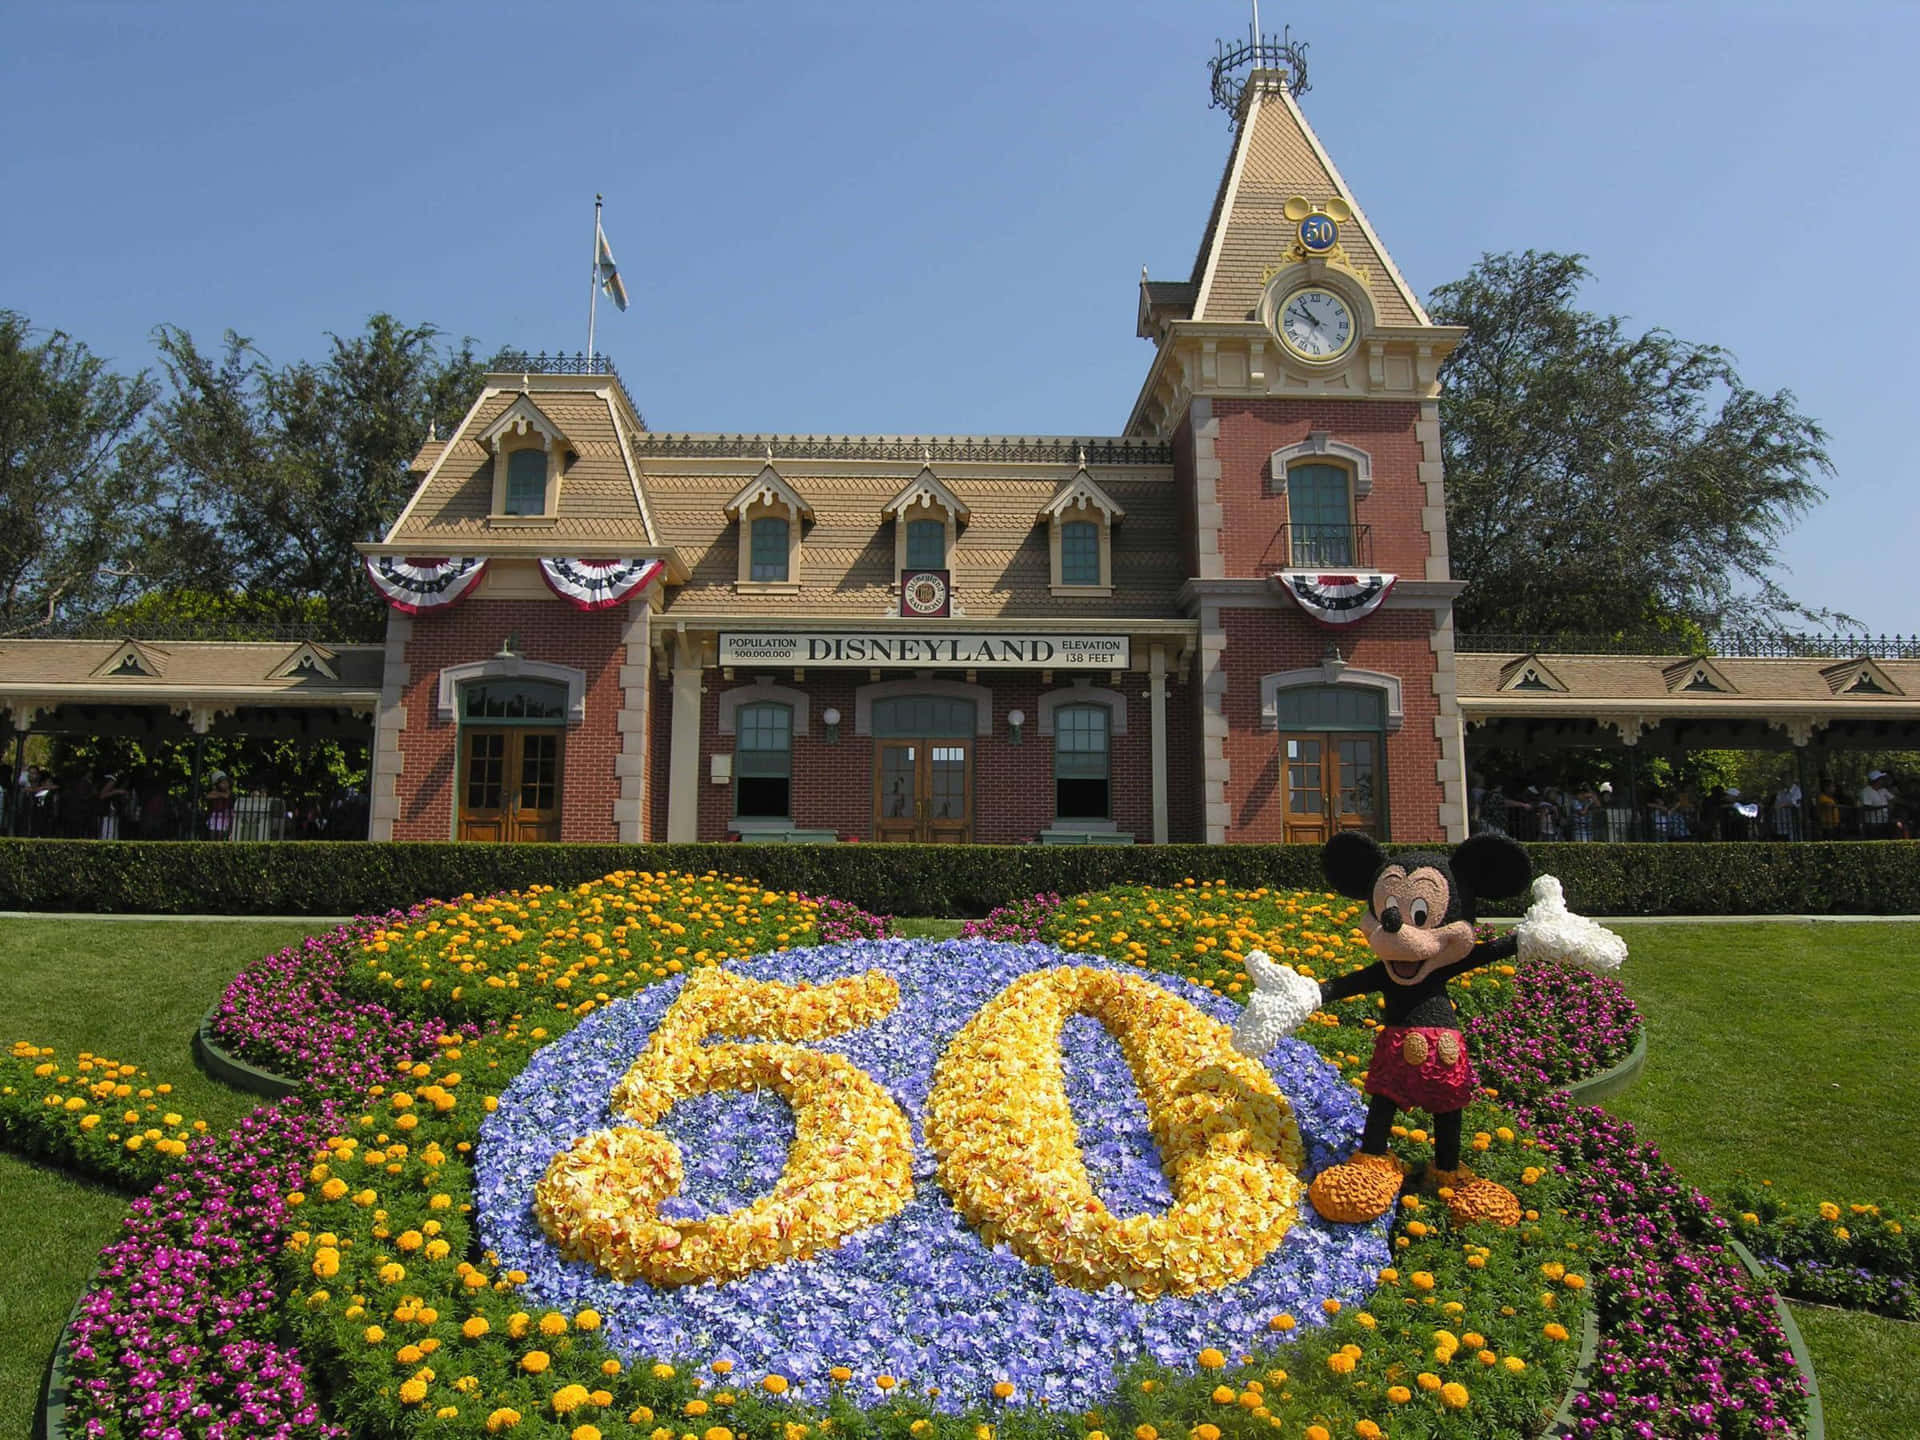 Take a magical ride through Disneyland